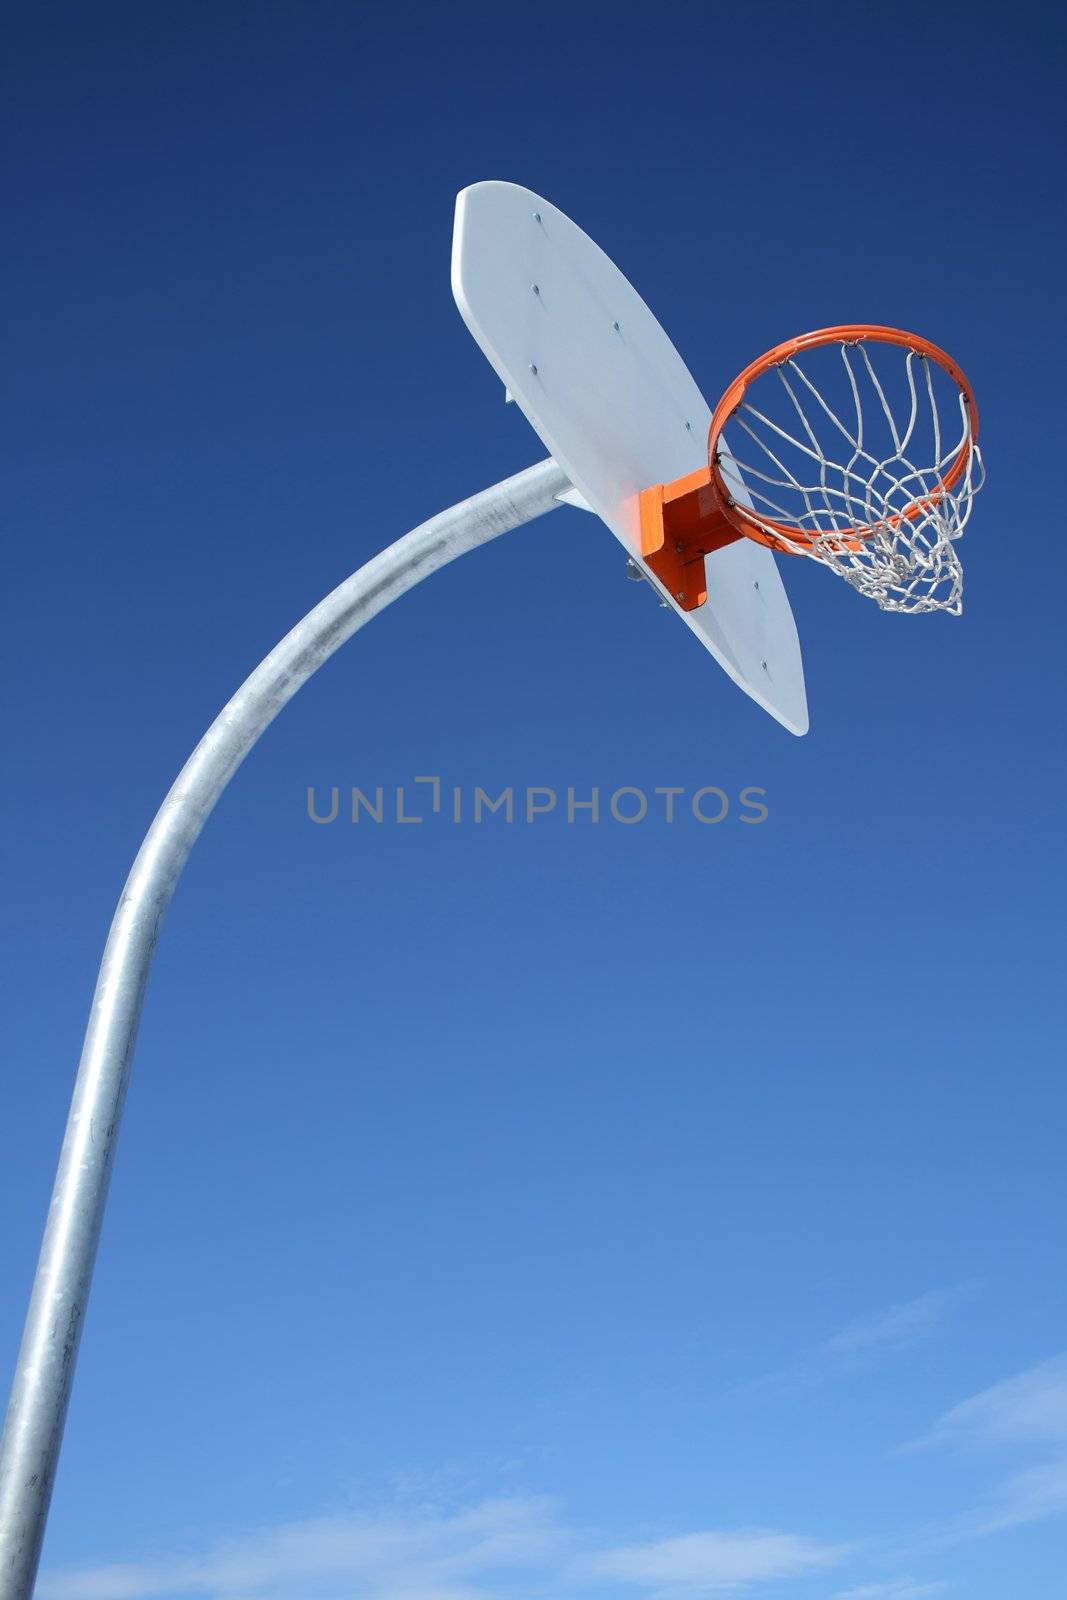 New basketball backboard and clear sky by anikasalsera